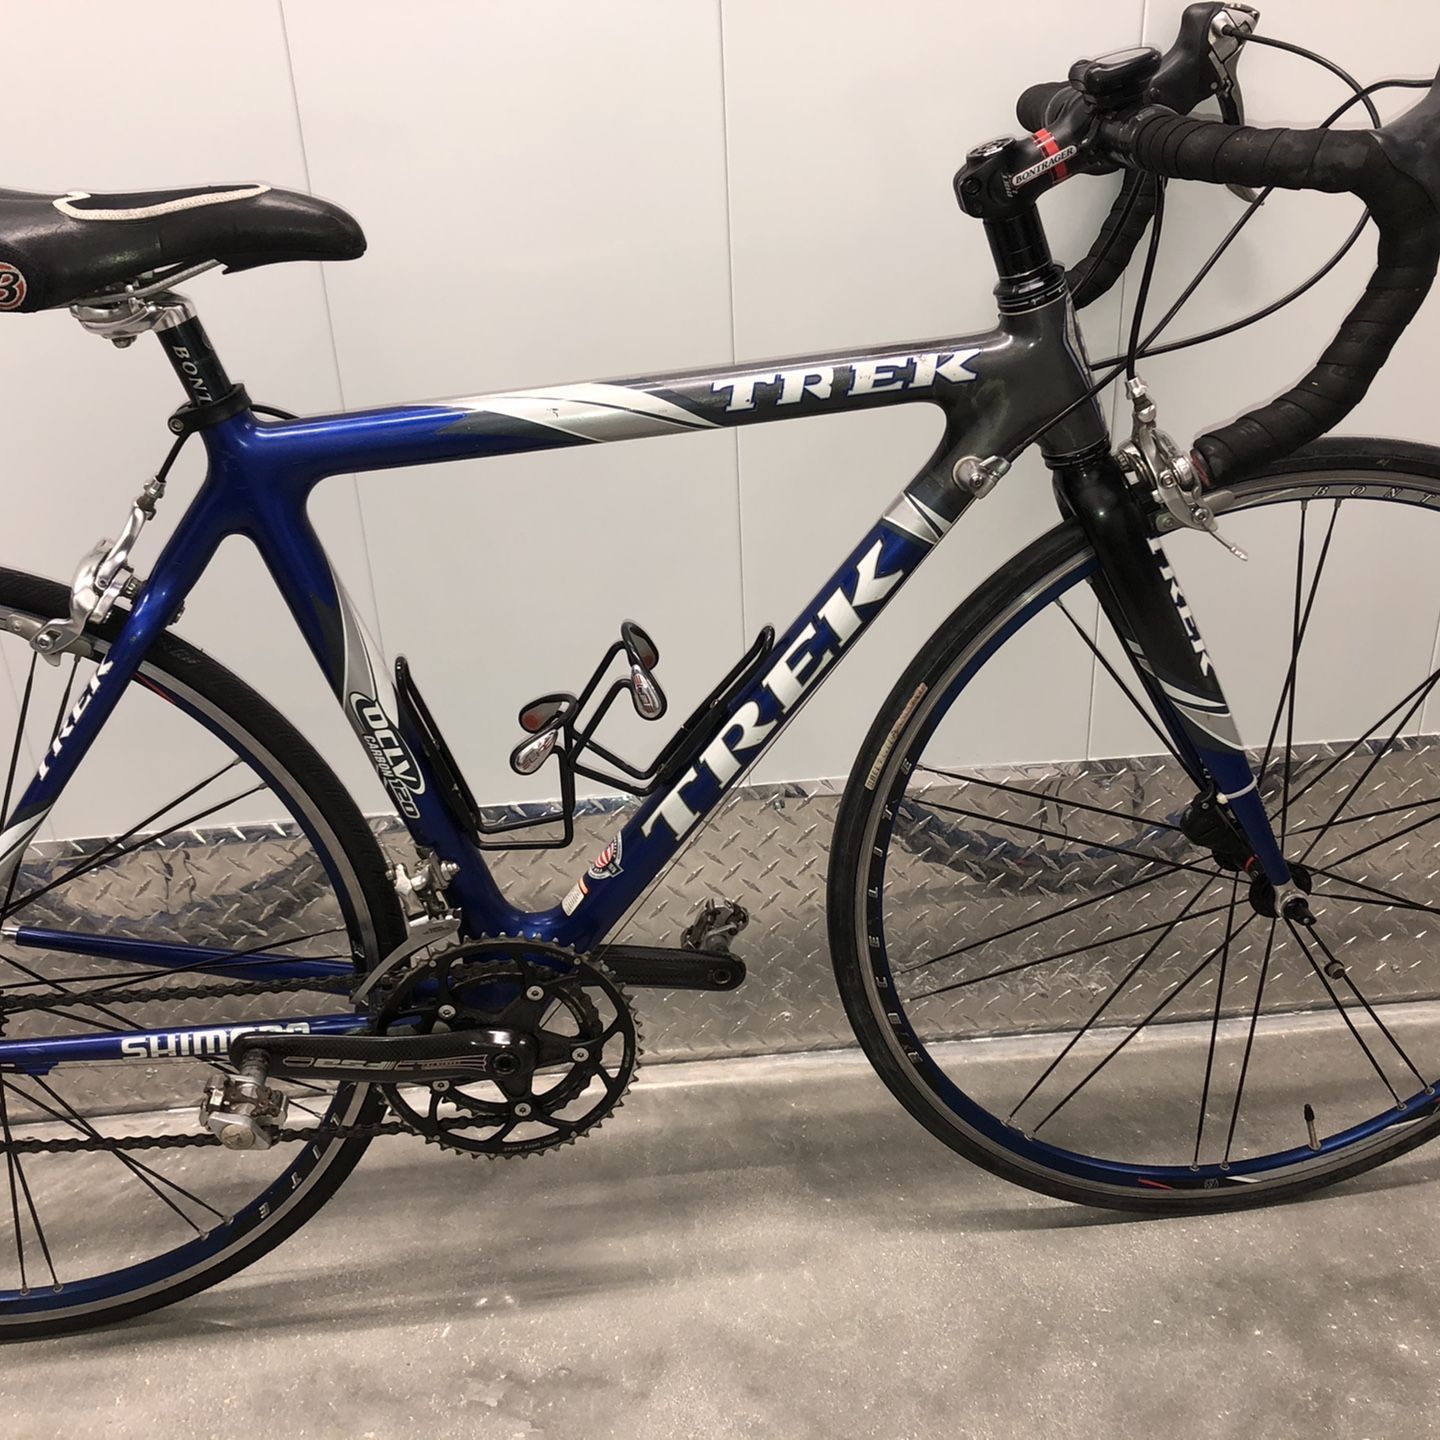 Trek carbon frame bike